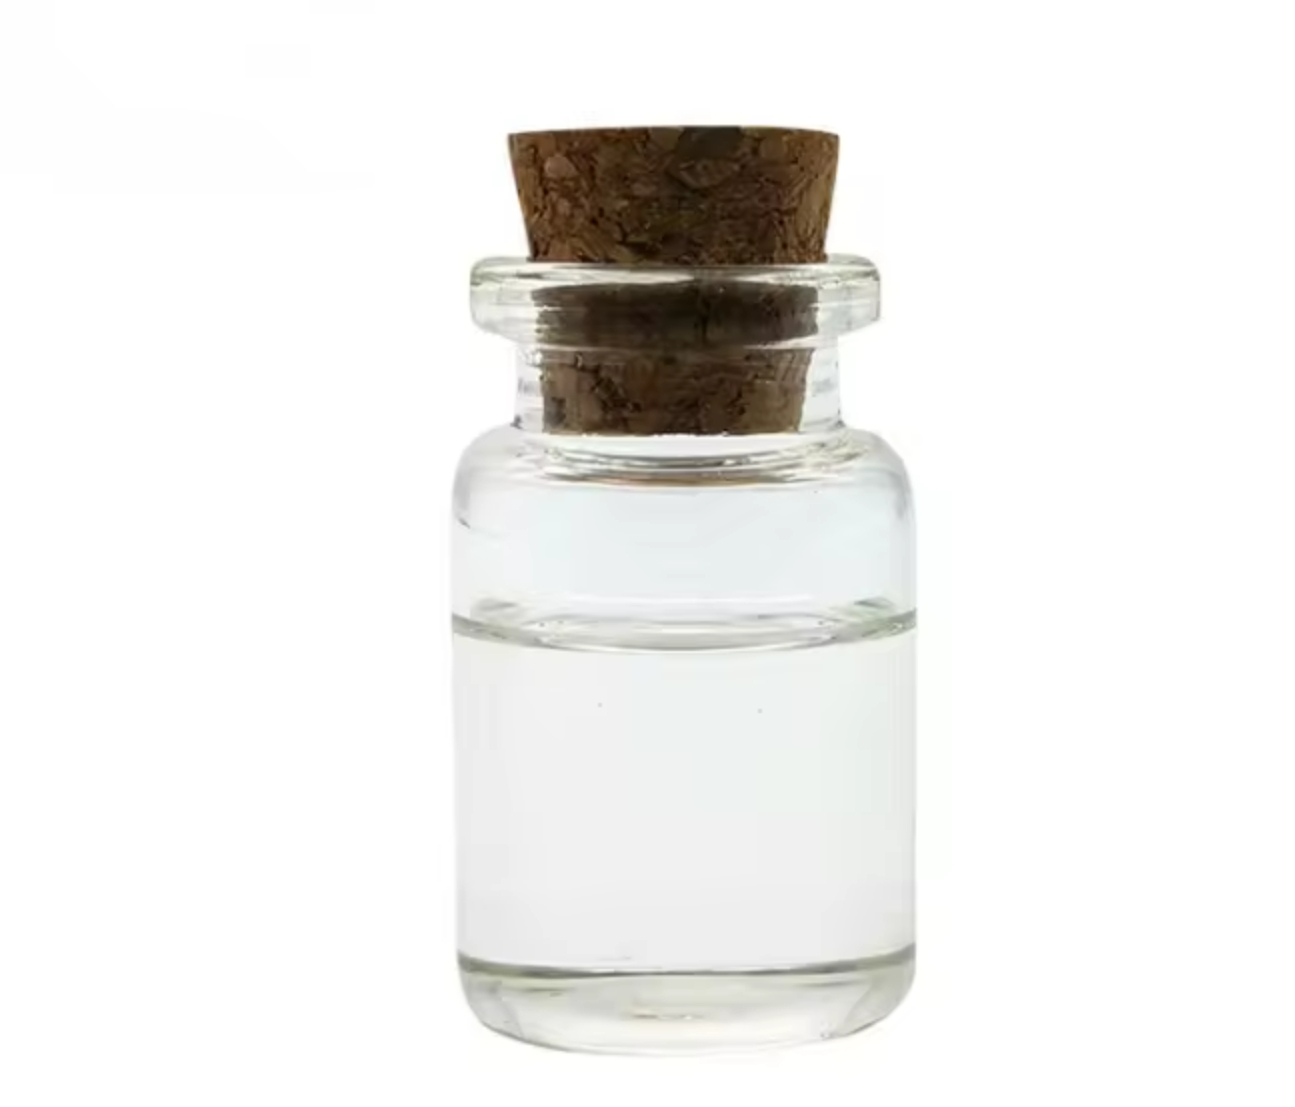 Flavor Fragrance use Cis-3-Hexenol Leaf Alcohol CAS 928-96-1